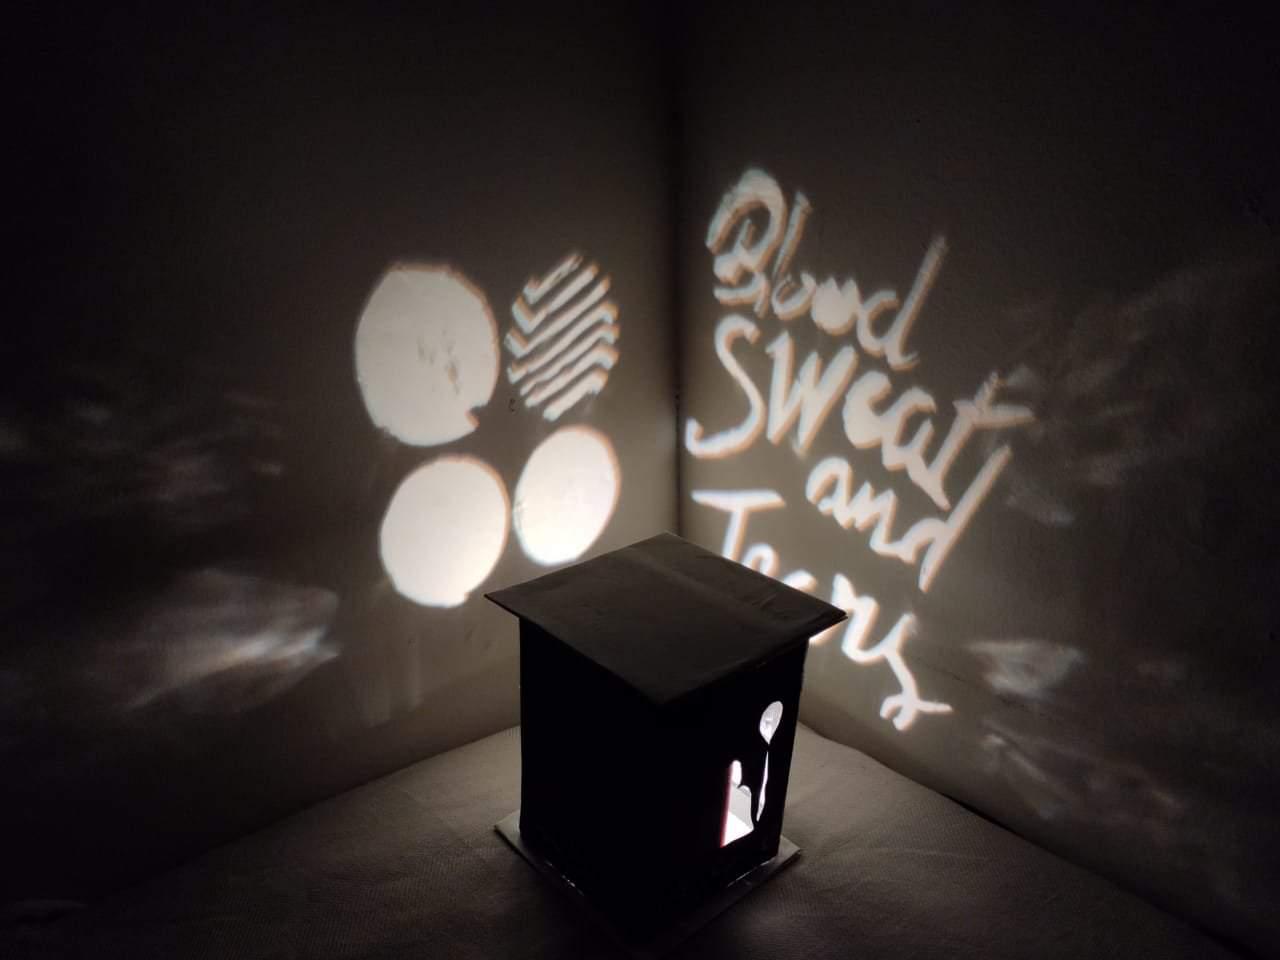 Likken Saga Goed gevoel DIY blood sweat and tears inspired shadow lamp box | ARMY's Amino